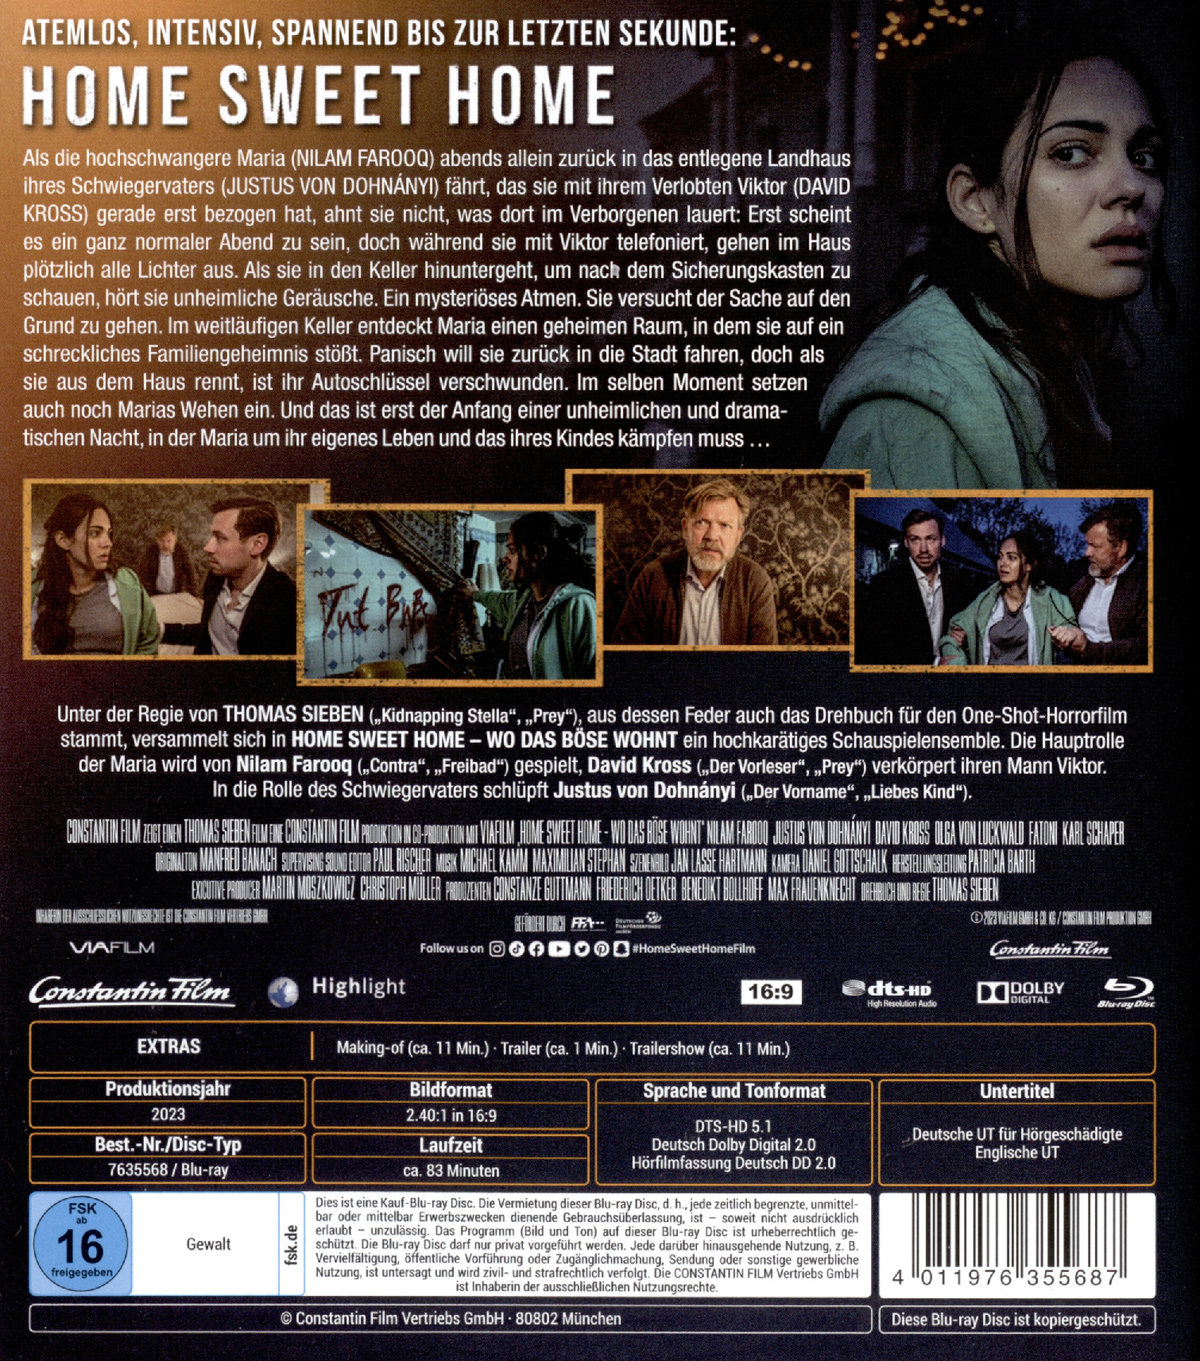 Home Sweet Home - Wo das Böse wohnt  (Blu-ray Disc)